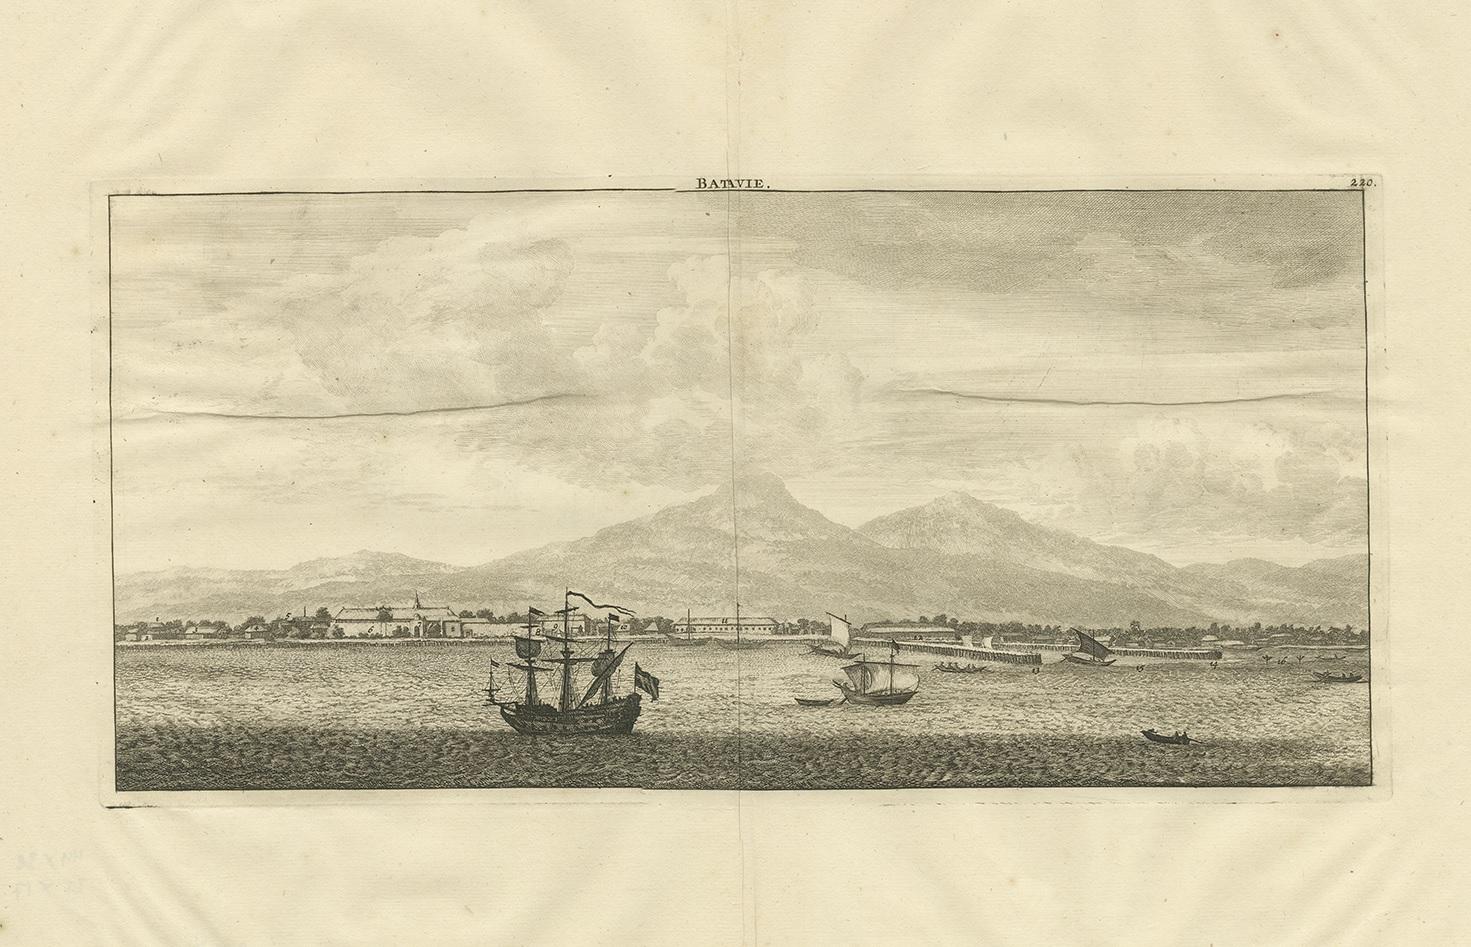 Antique print titled 'Batavie'. Old print with a view of Batavia, Jakarta. This print originates from 'Cornelis de Bruins Reizen over Moskovie, door Persie en Indie (..)'.